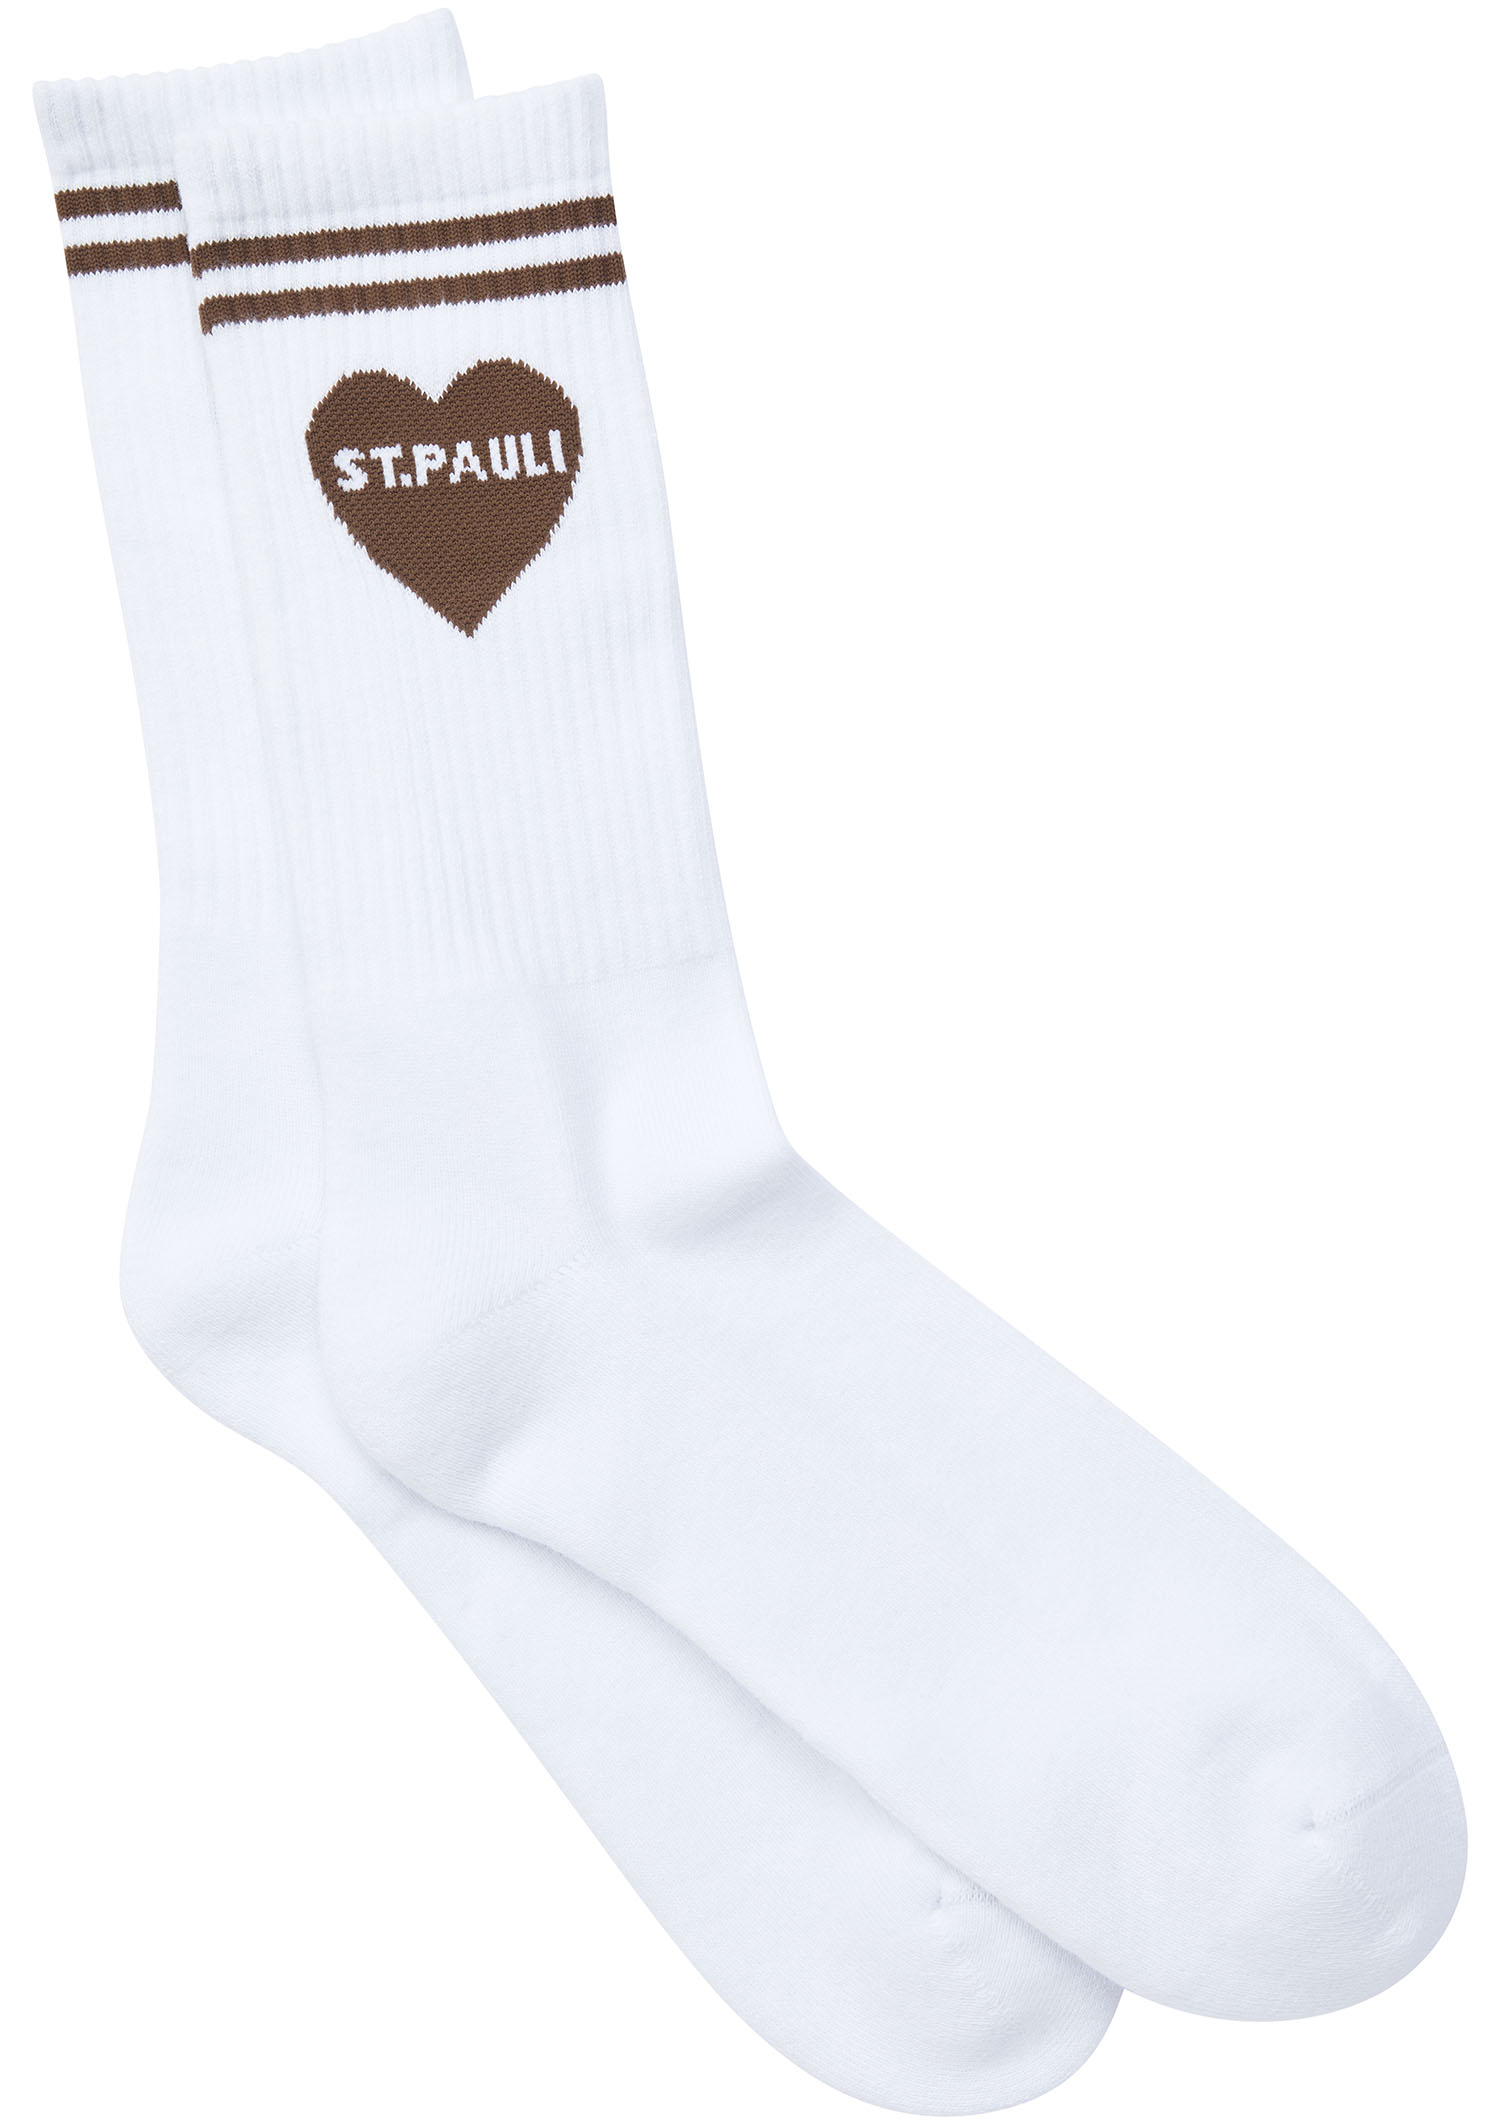 Socks "St. Pauli Heart" - brown